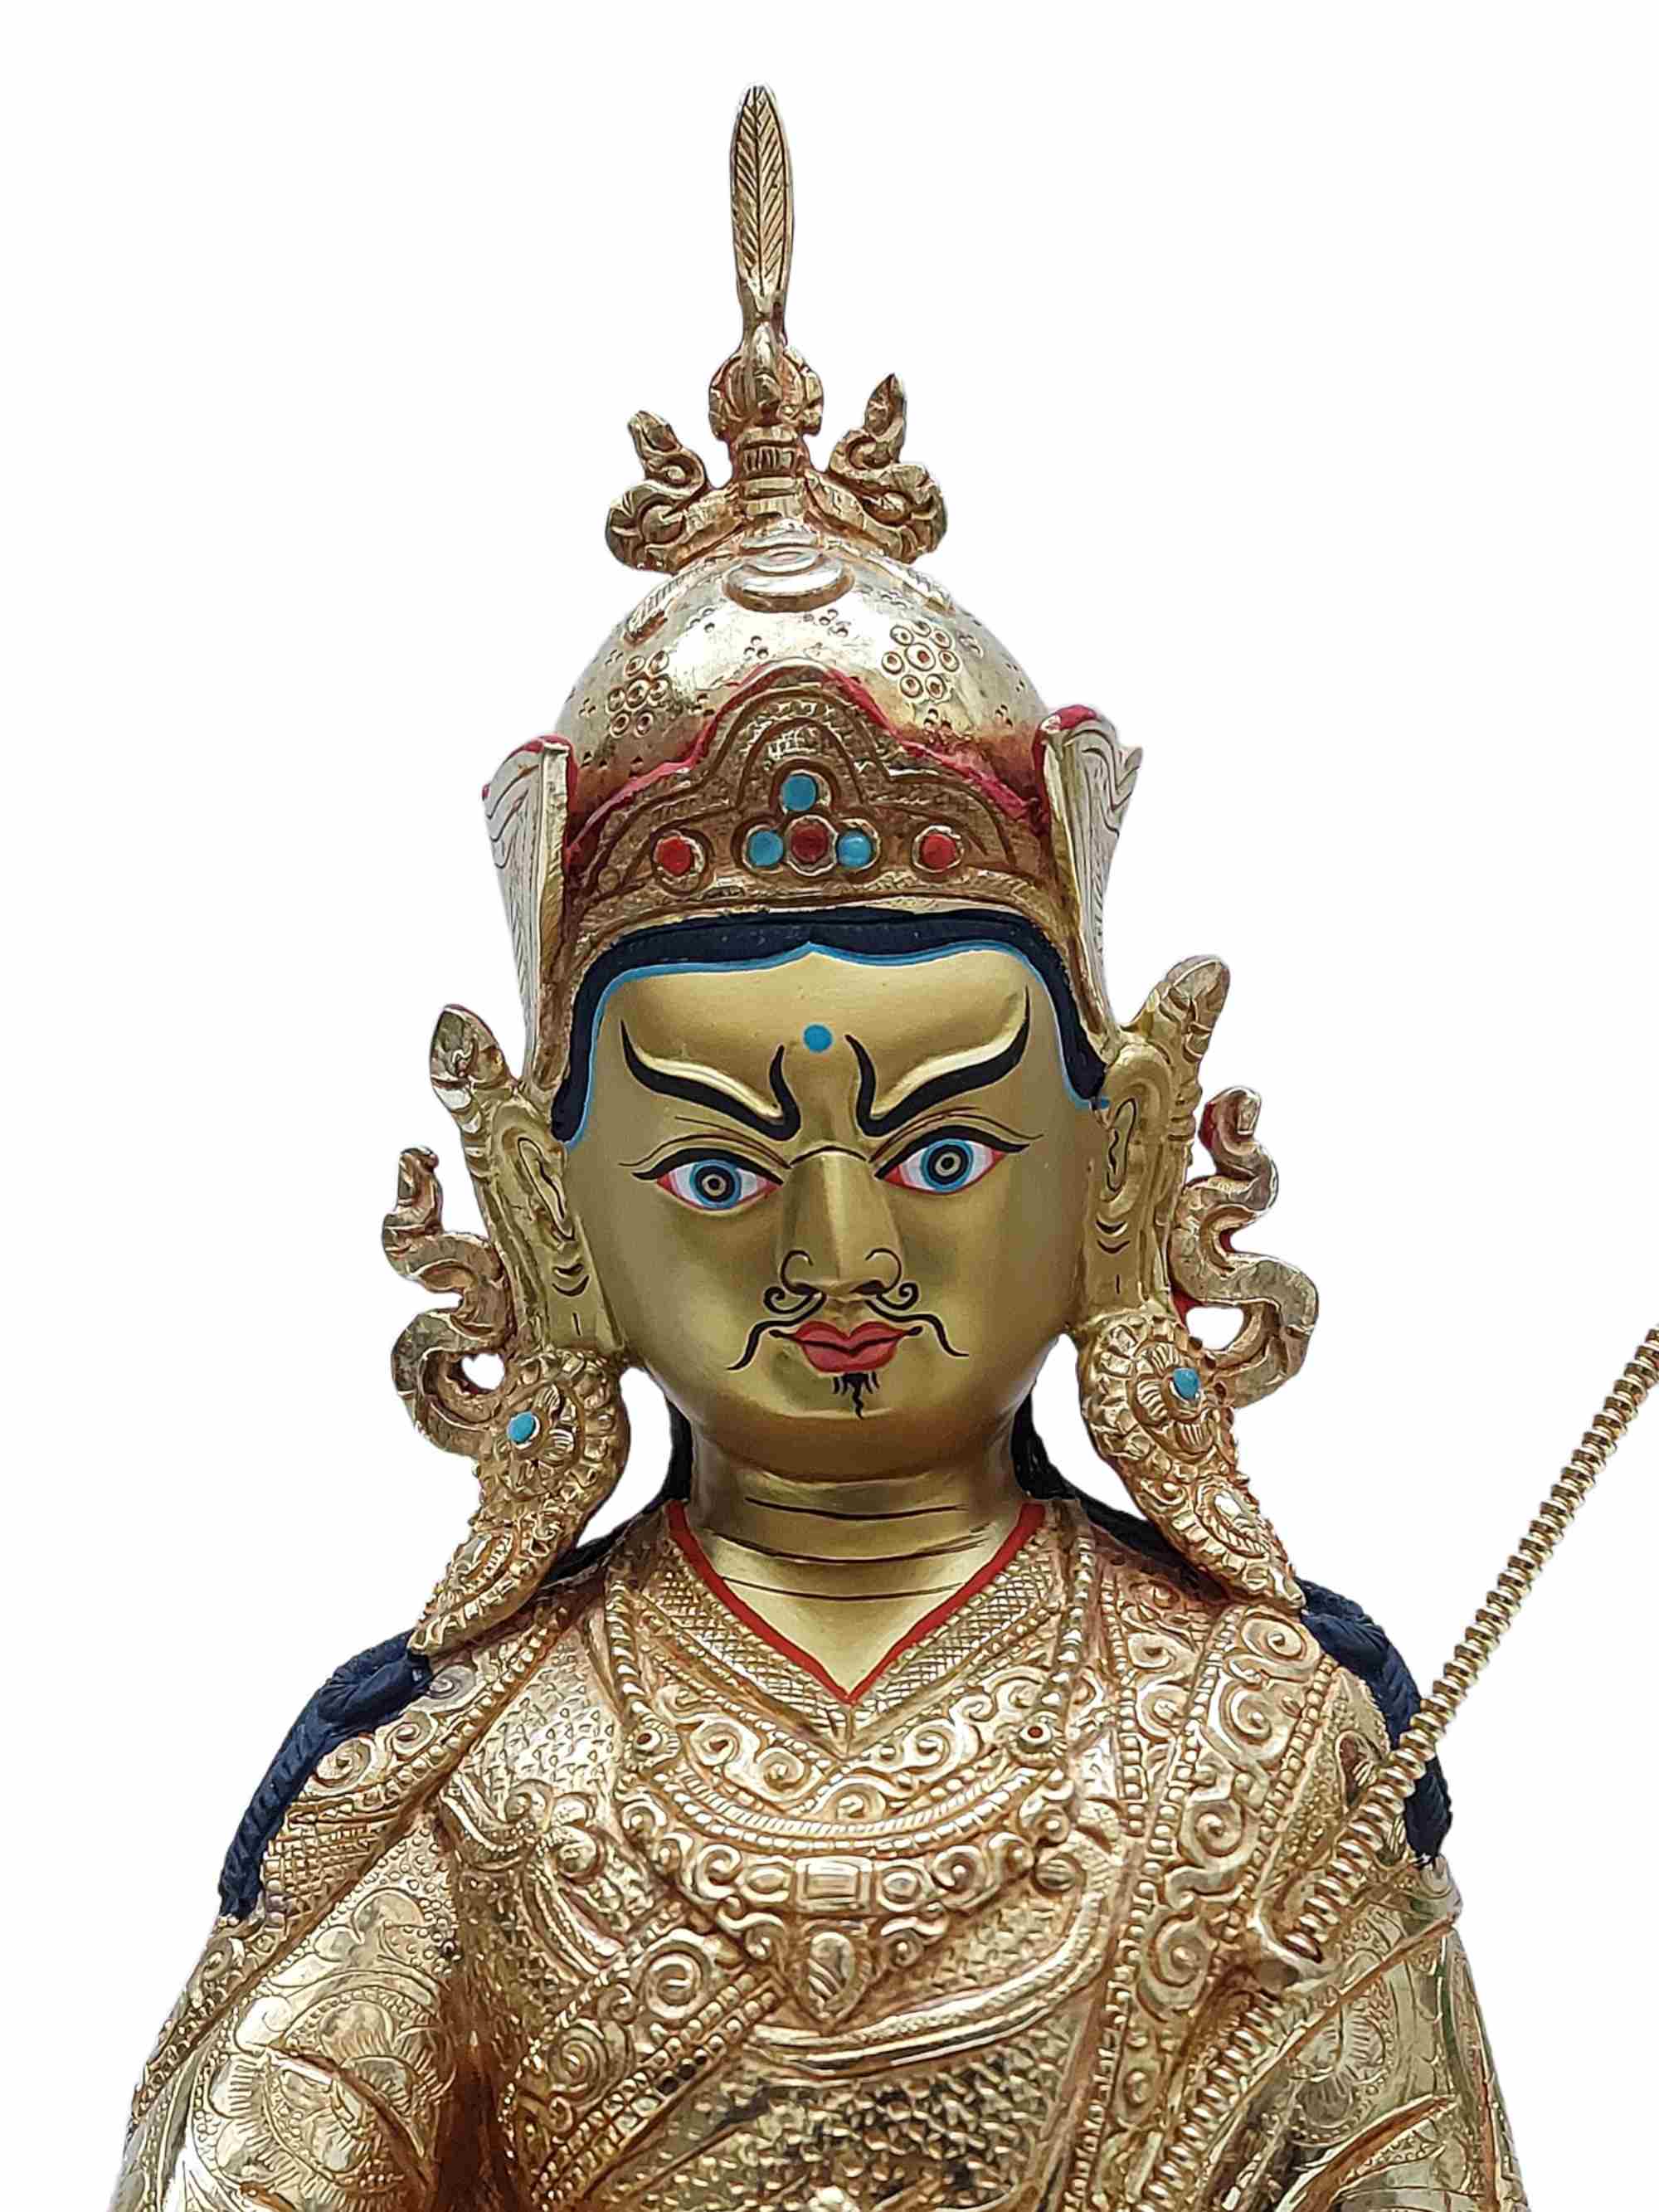 Buddhist Handmade Statue Of Padmasambhava guru Rinpoche, full Fire Gold Plated With Painted Face